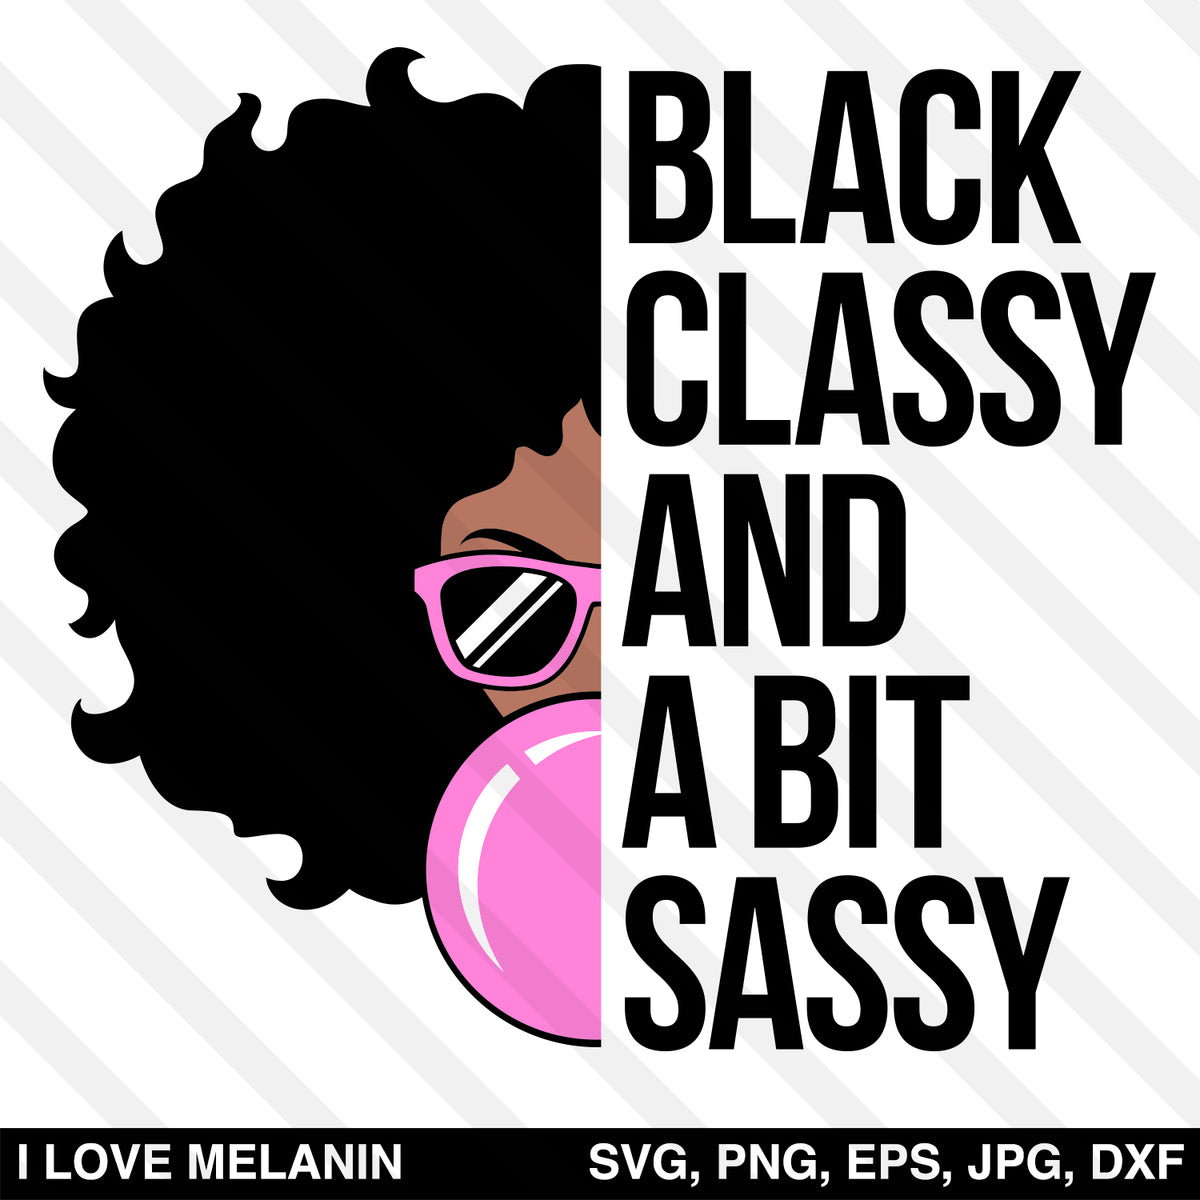 Black Classy And A Bit Sassy SVG - I Love Melanin